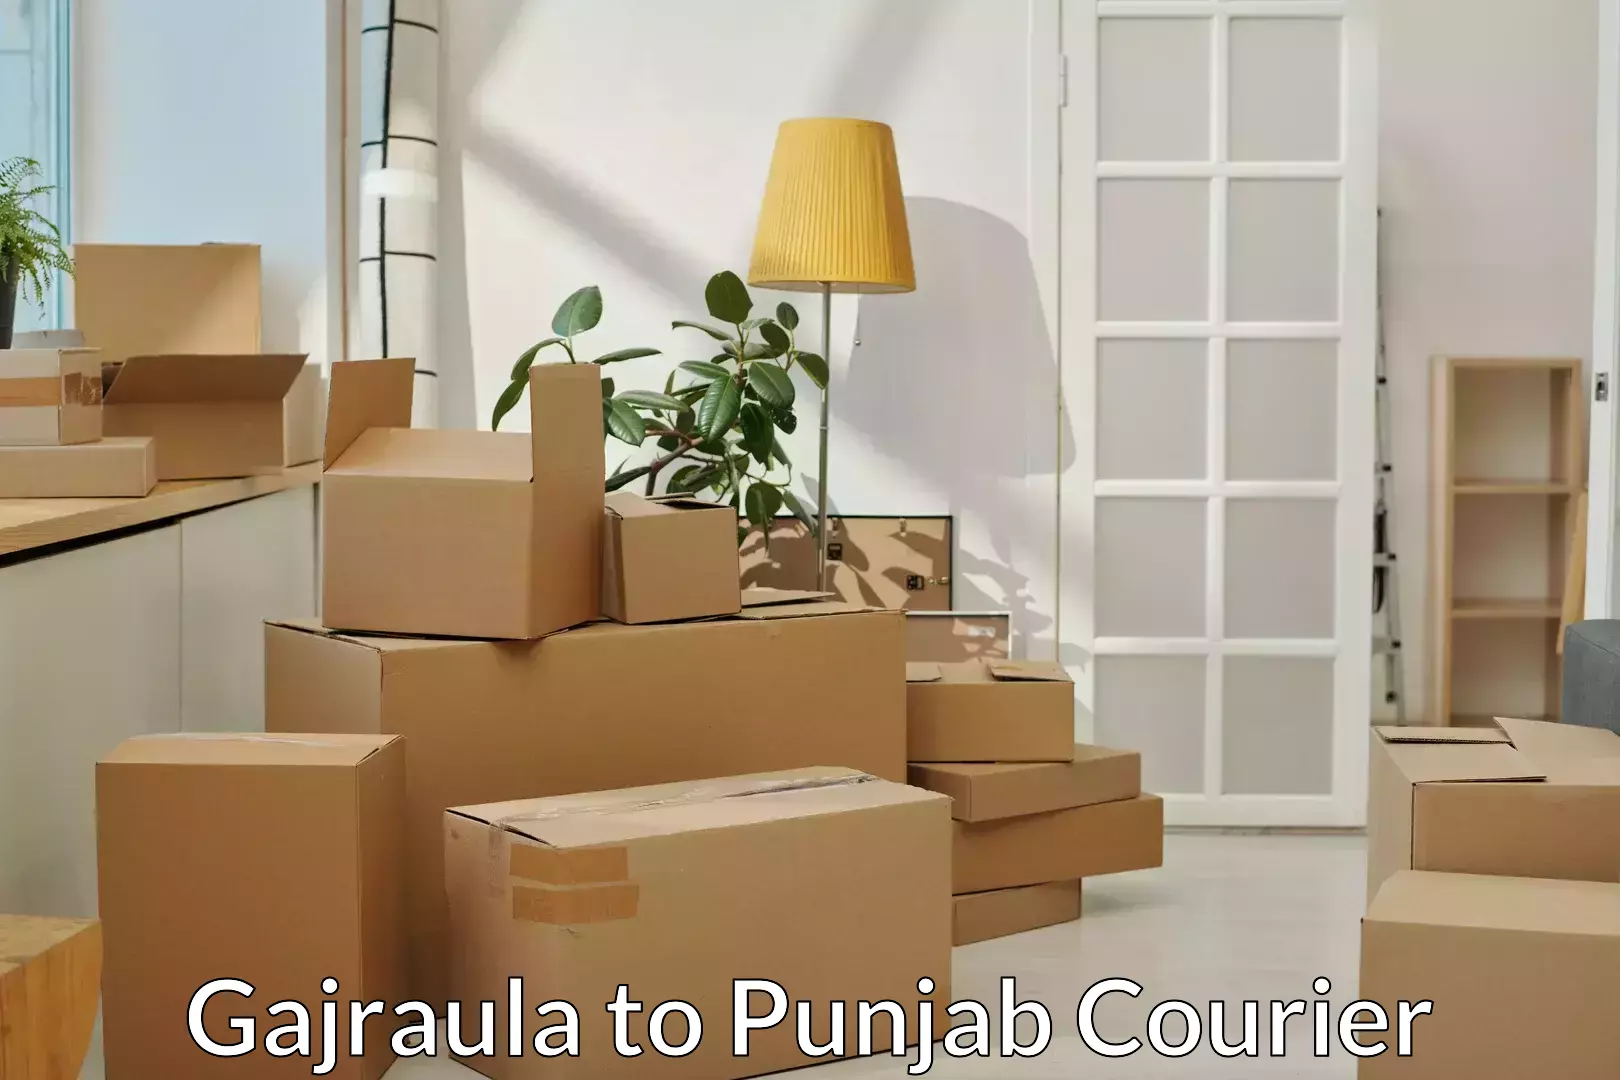 Furniture delivery service Gajraula to Sirhind Fatehgarh